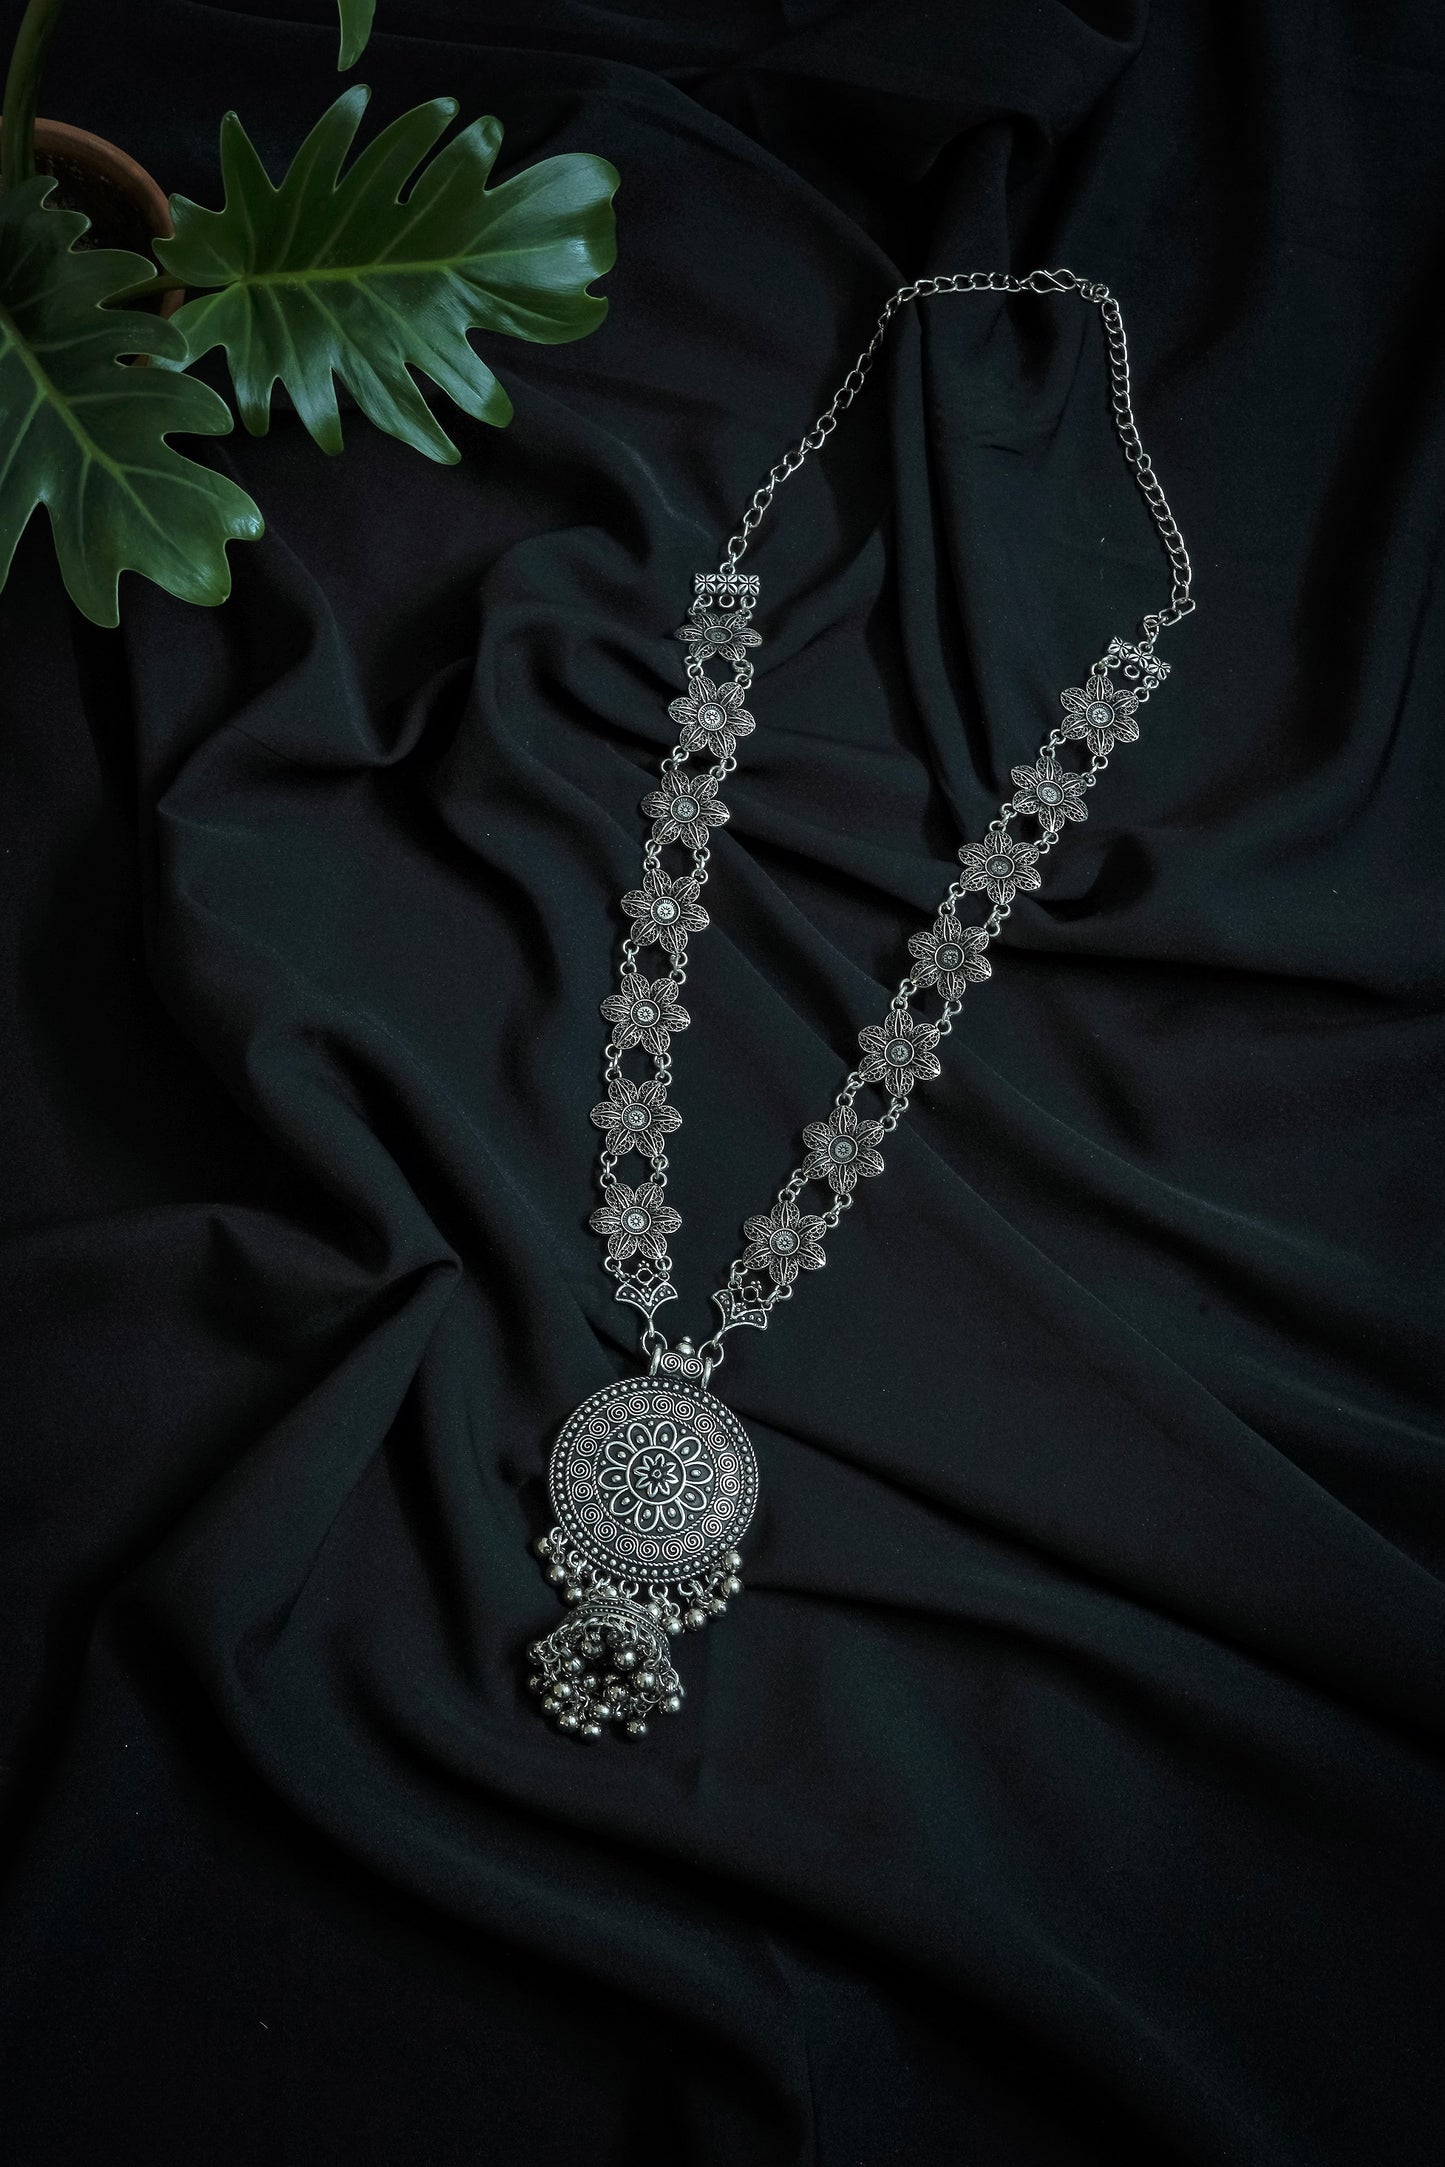 Antique Kohlapuri Necklace